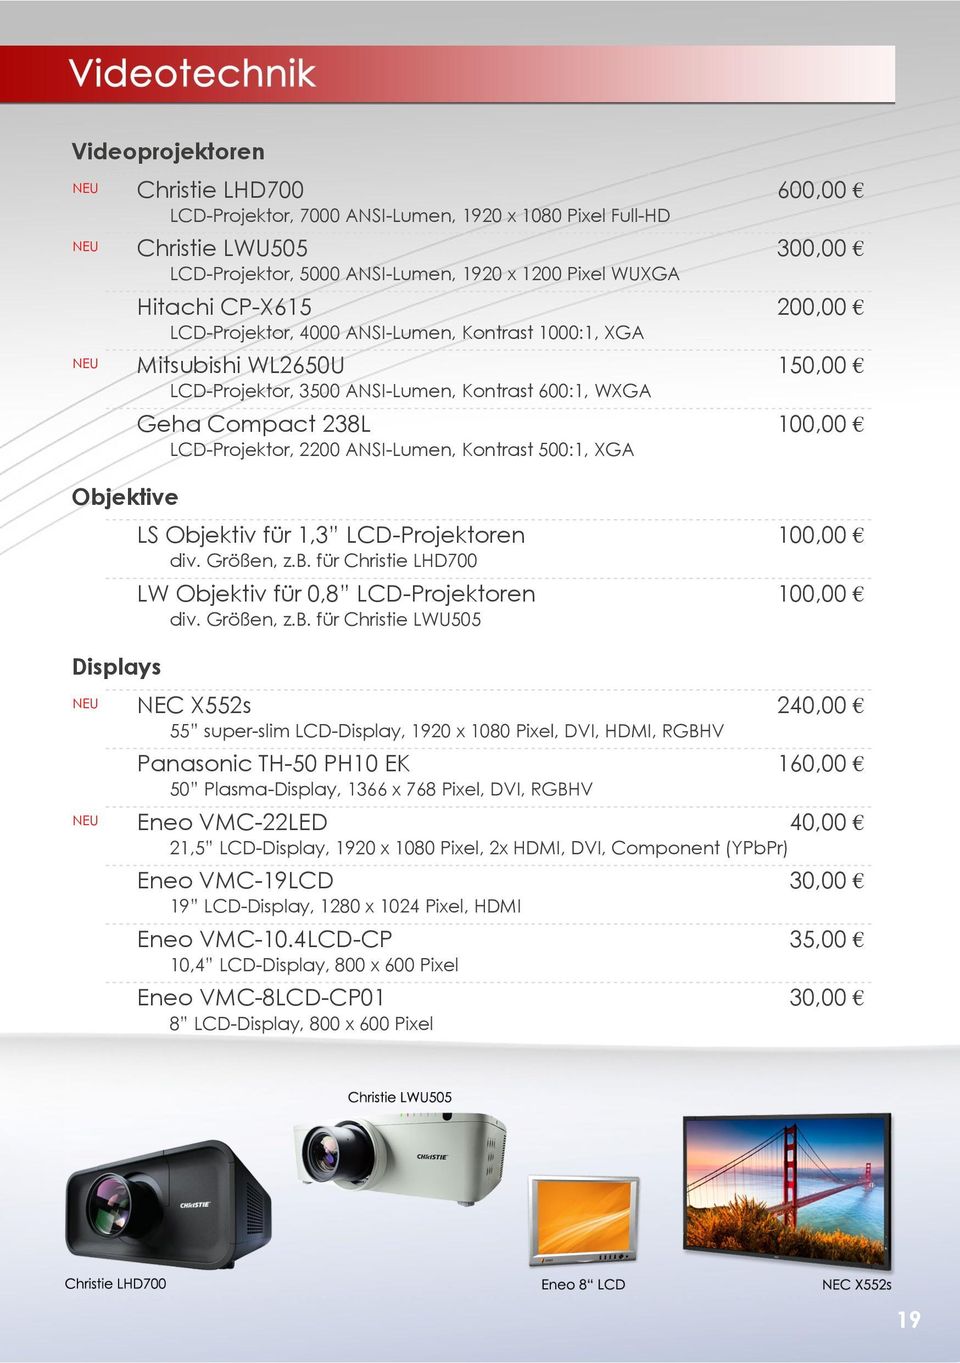 LCD-Projektor, 2200 ANSI-Lumen, Kontrast 500:1, XGA LS Obj